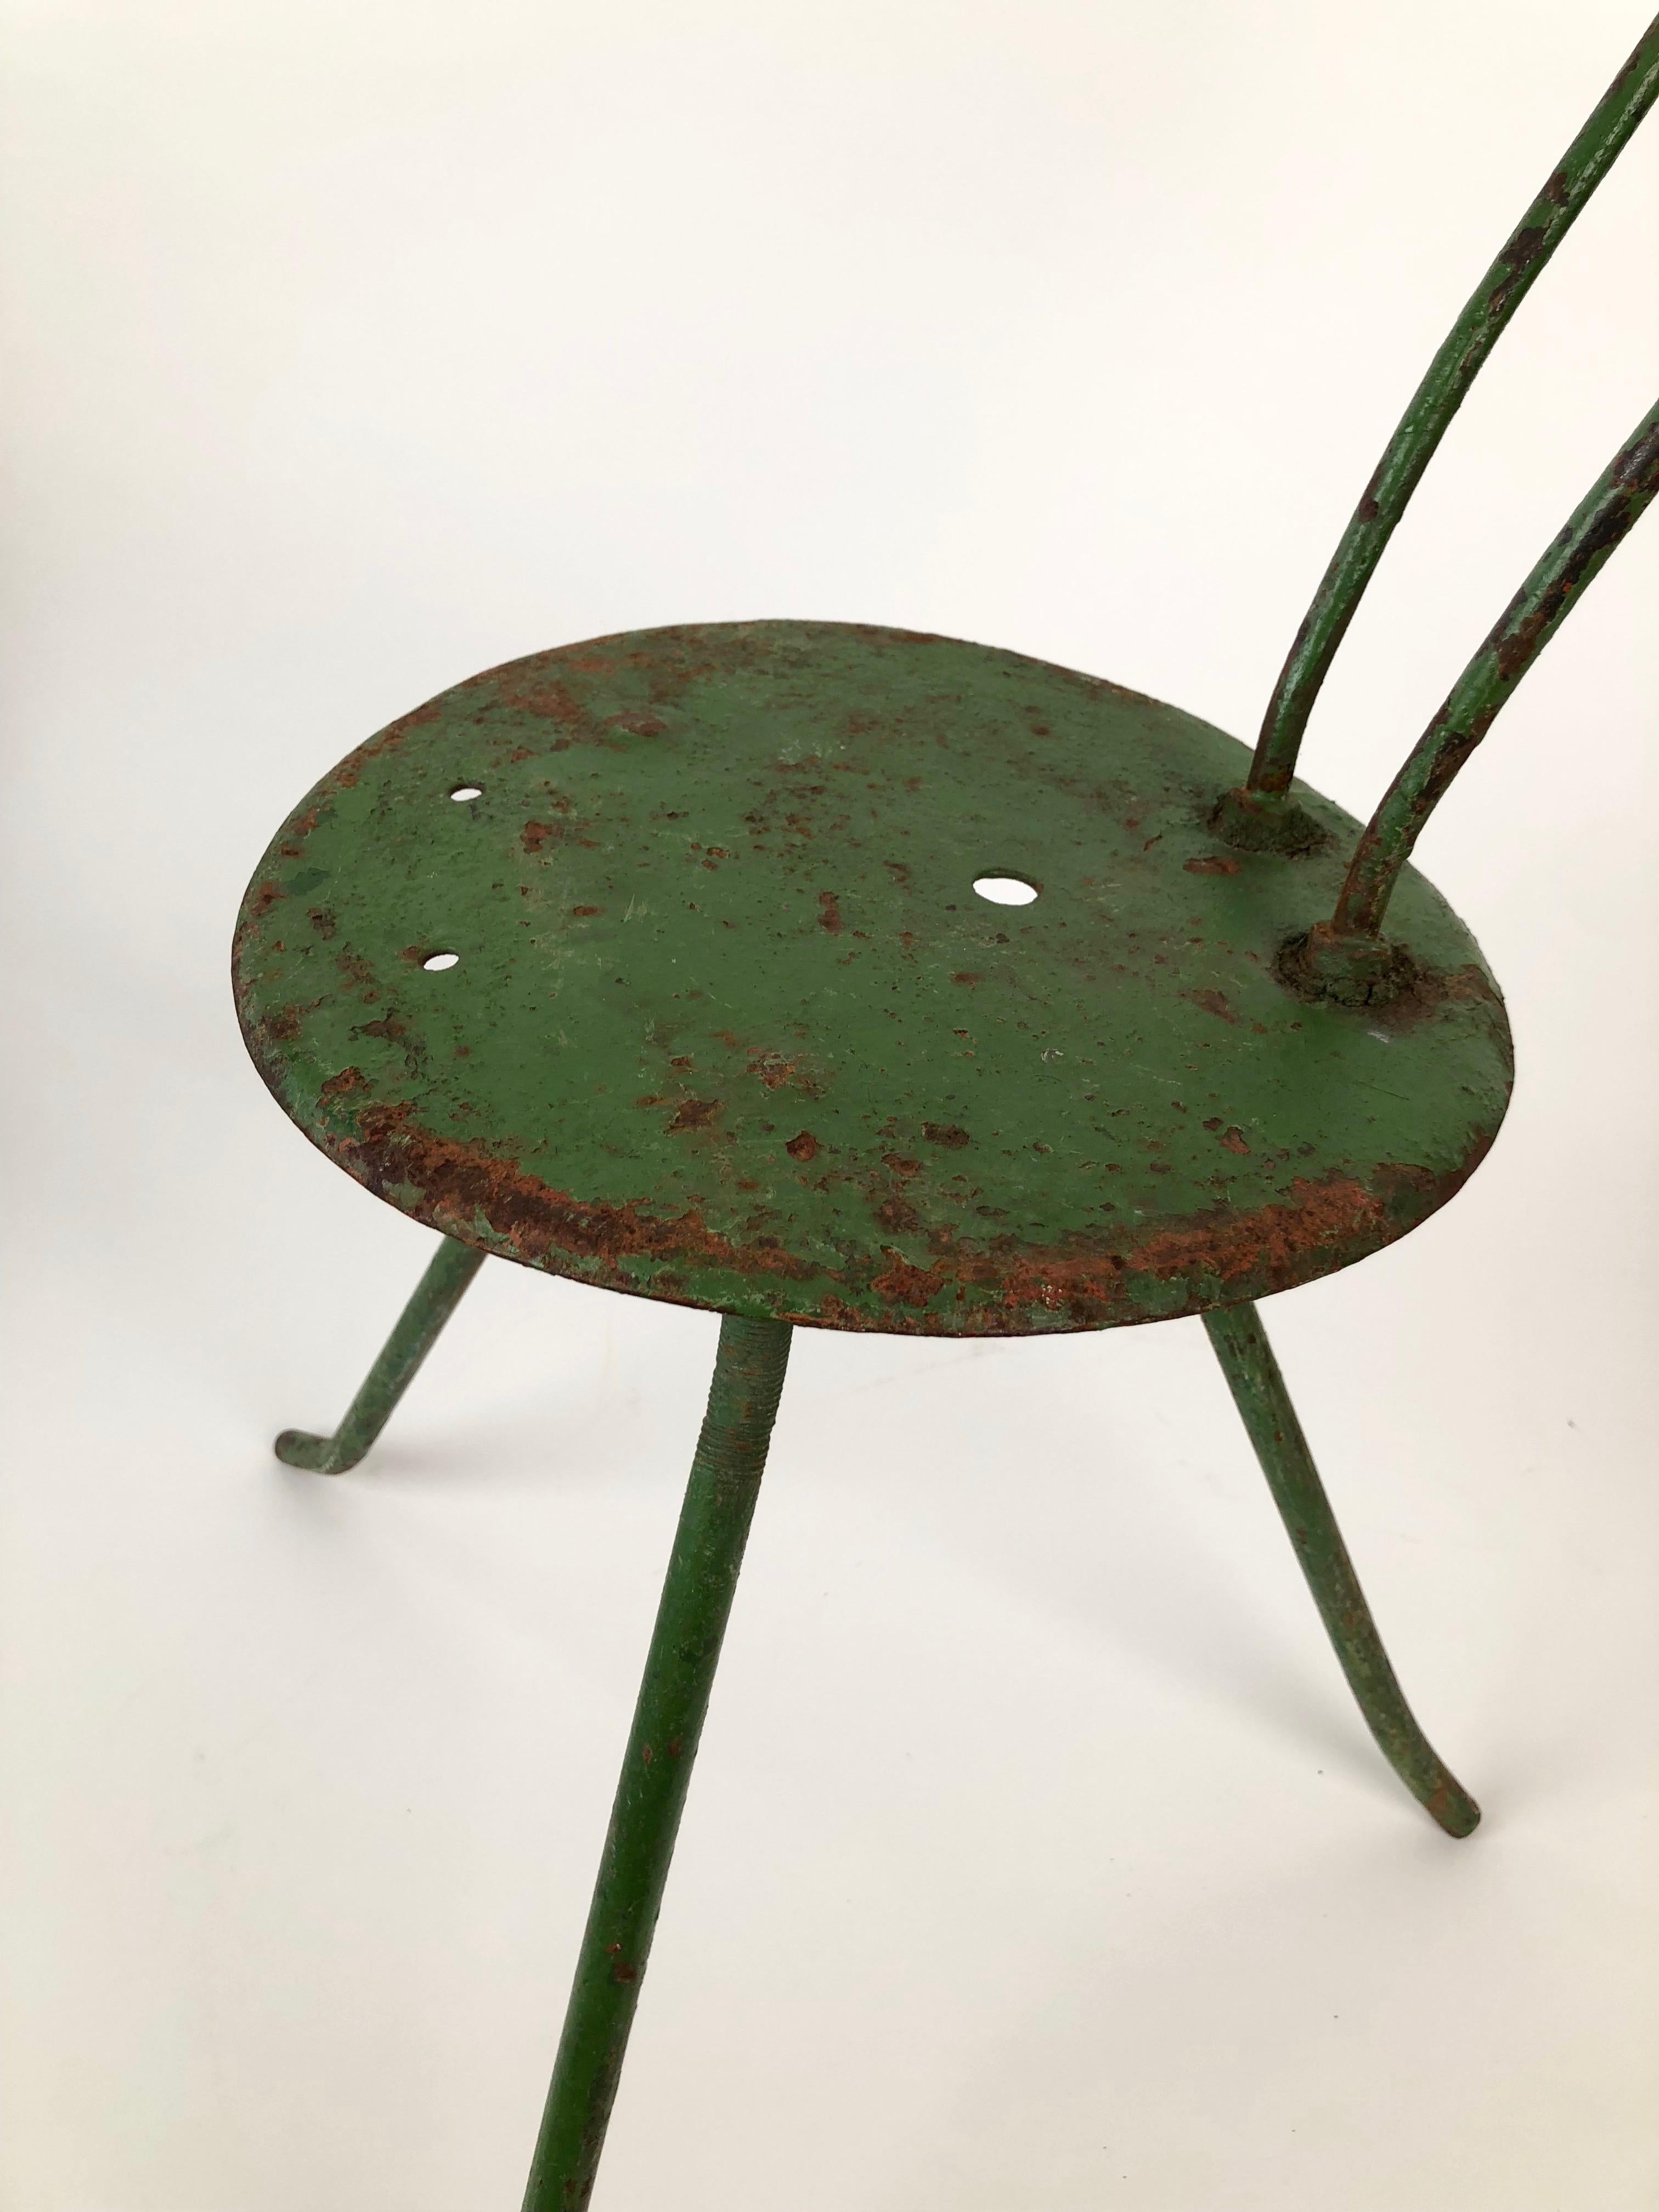 Pair of Handmade Metal Chairs, 1950s, from the Balaton Lake Region, Hungary For Sale 7